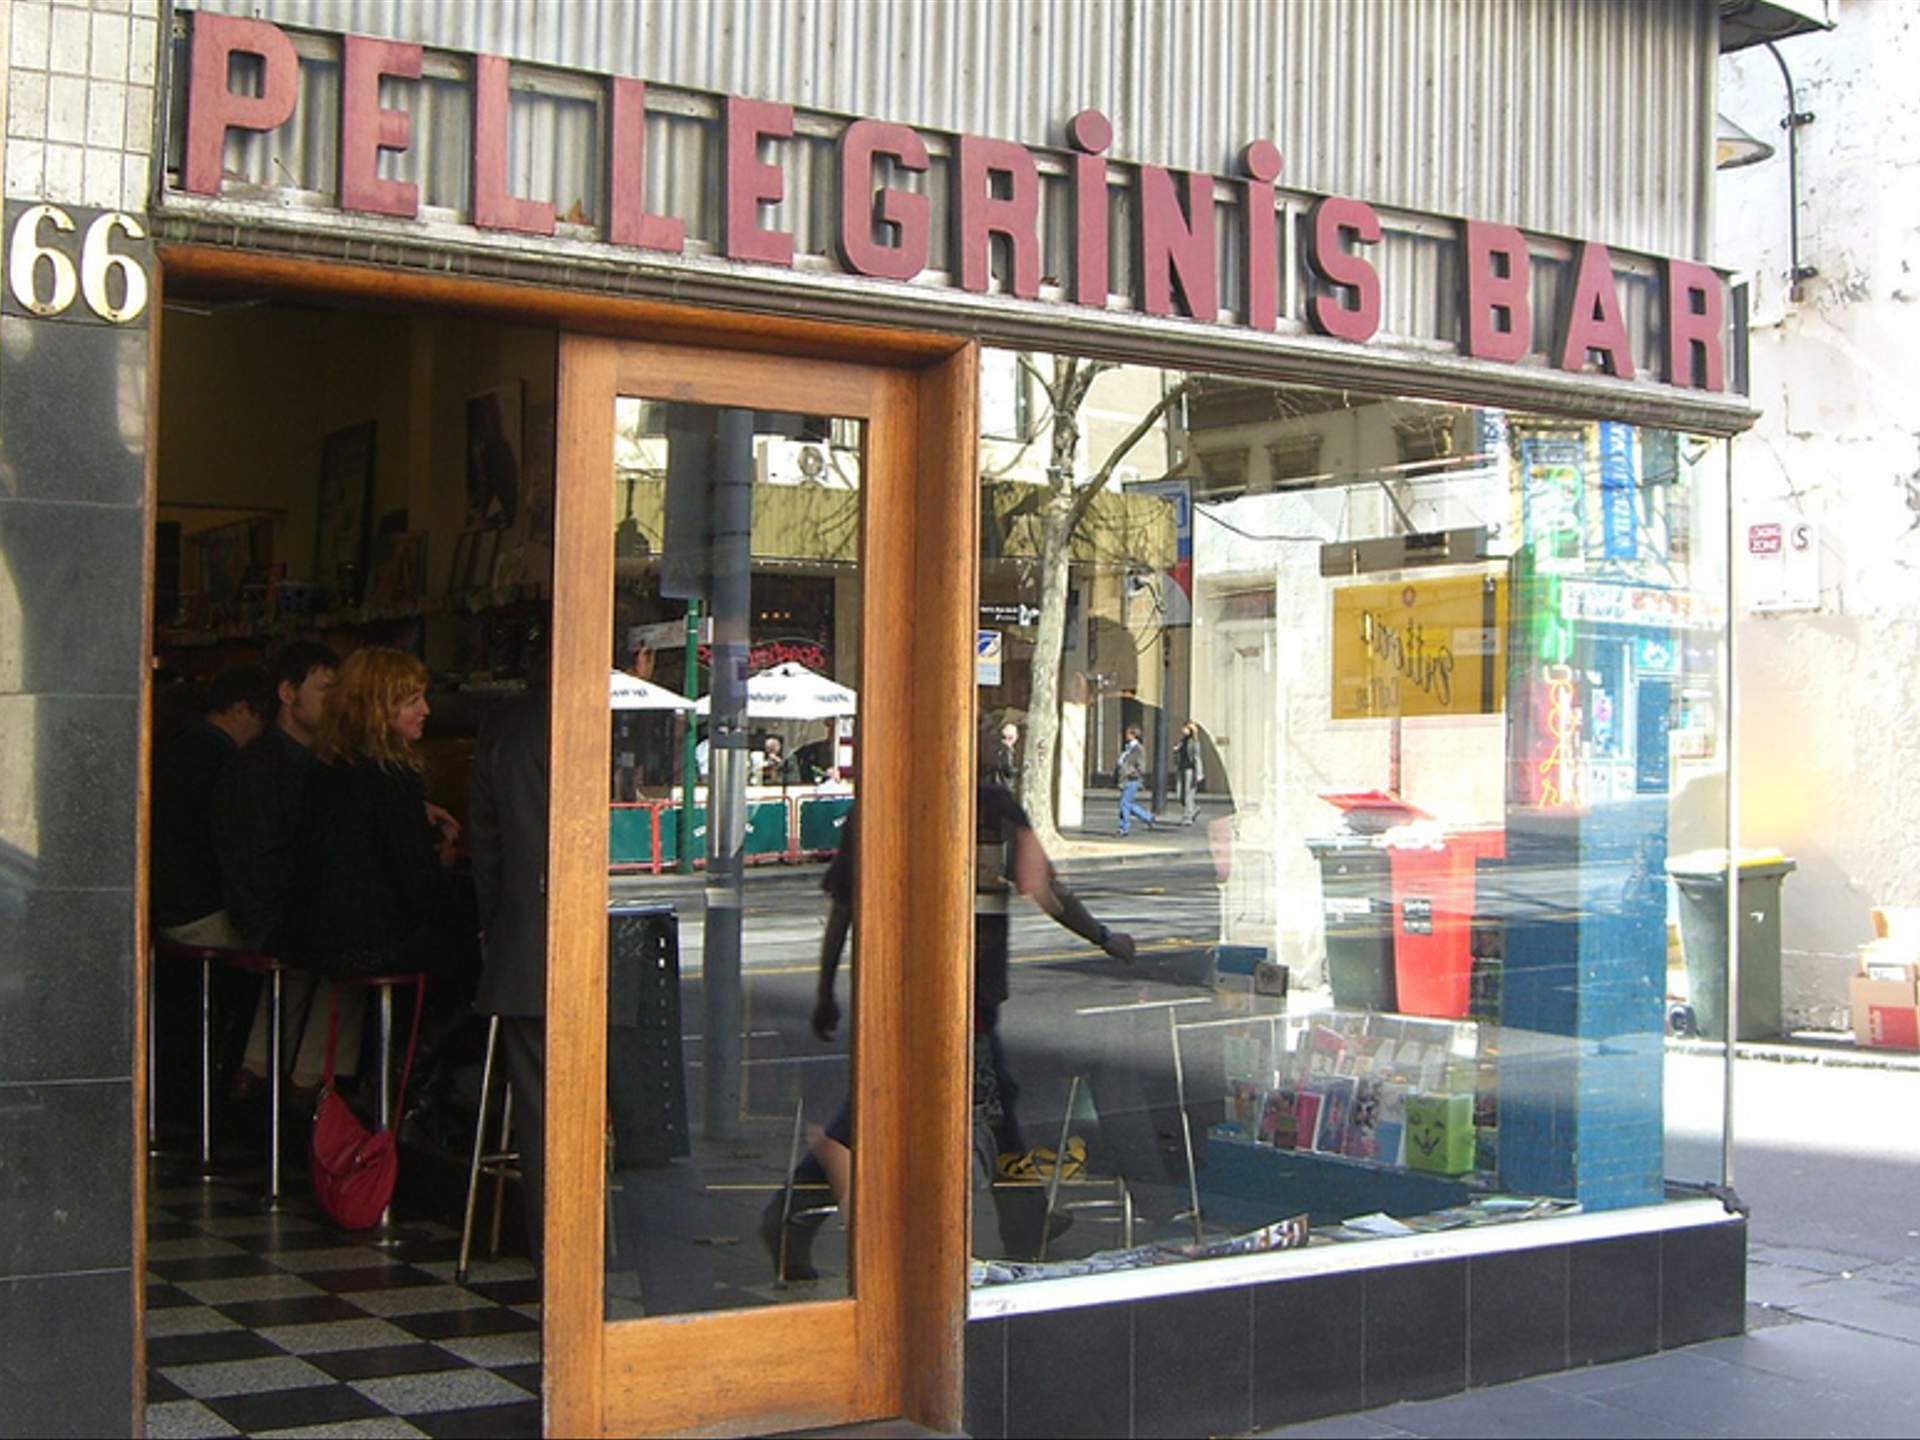 Pellegrini's Espresso Bar, Melbourne Review